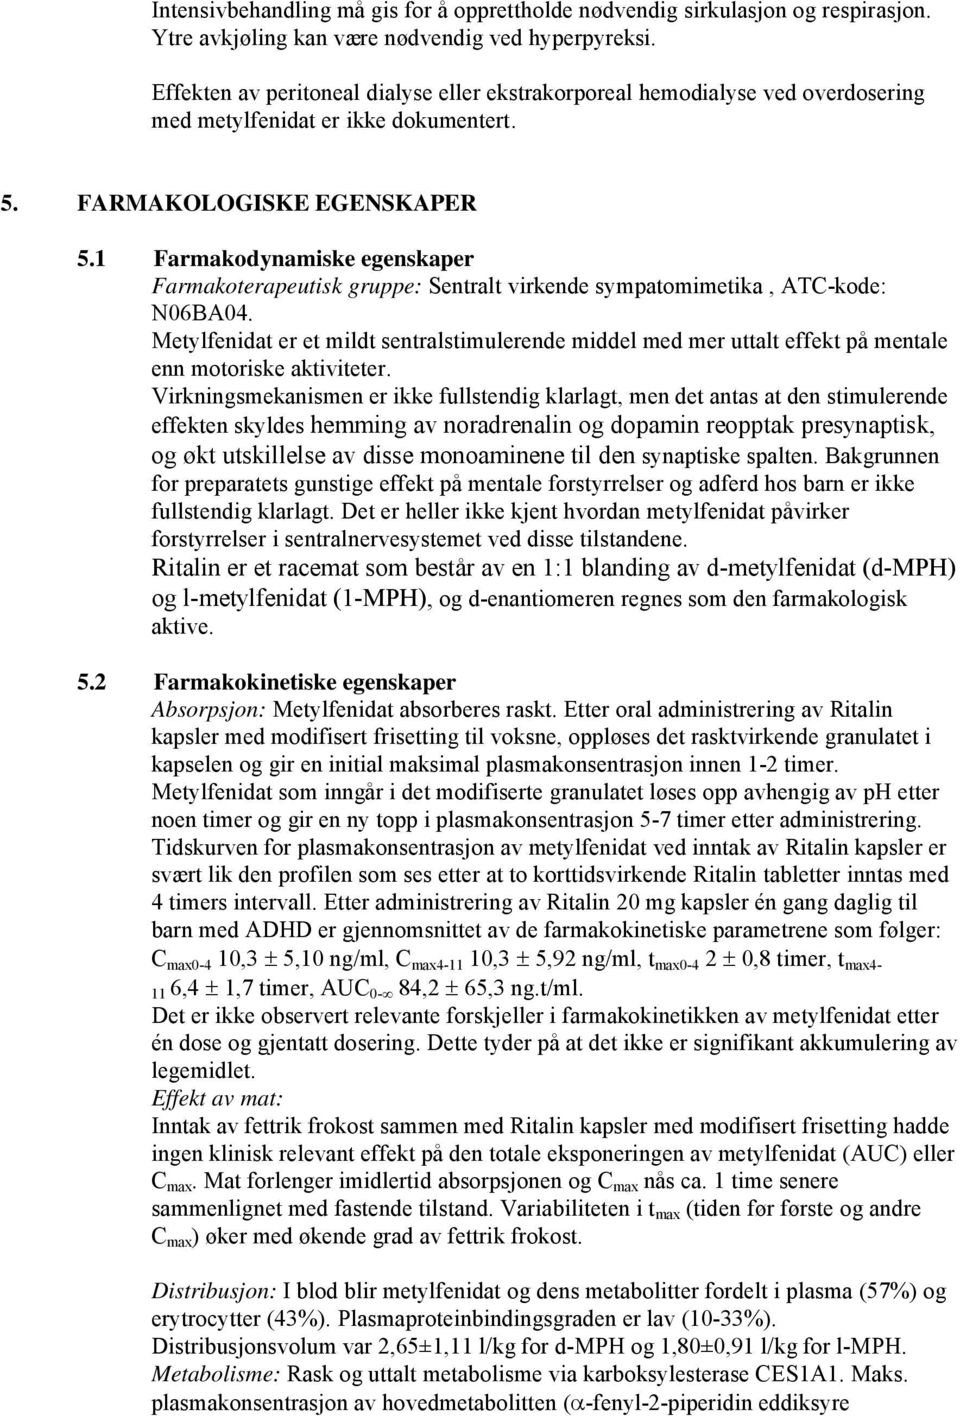 1 Farmakodynamiske egenskaper Farmakoterapeutisk gruppe: Sentralt virkende sympatomimetika, ATC-kode: N06BA04.